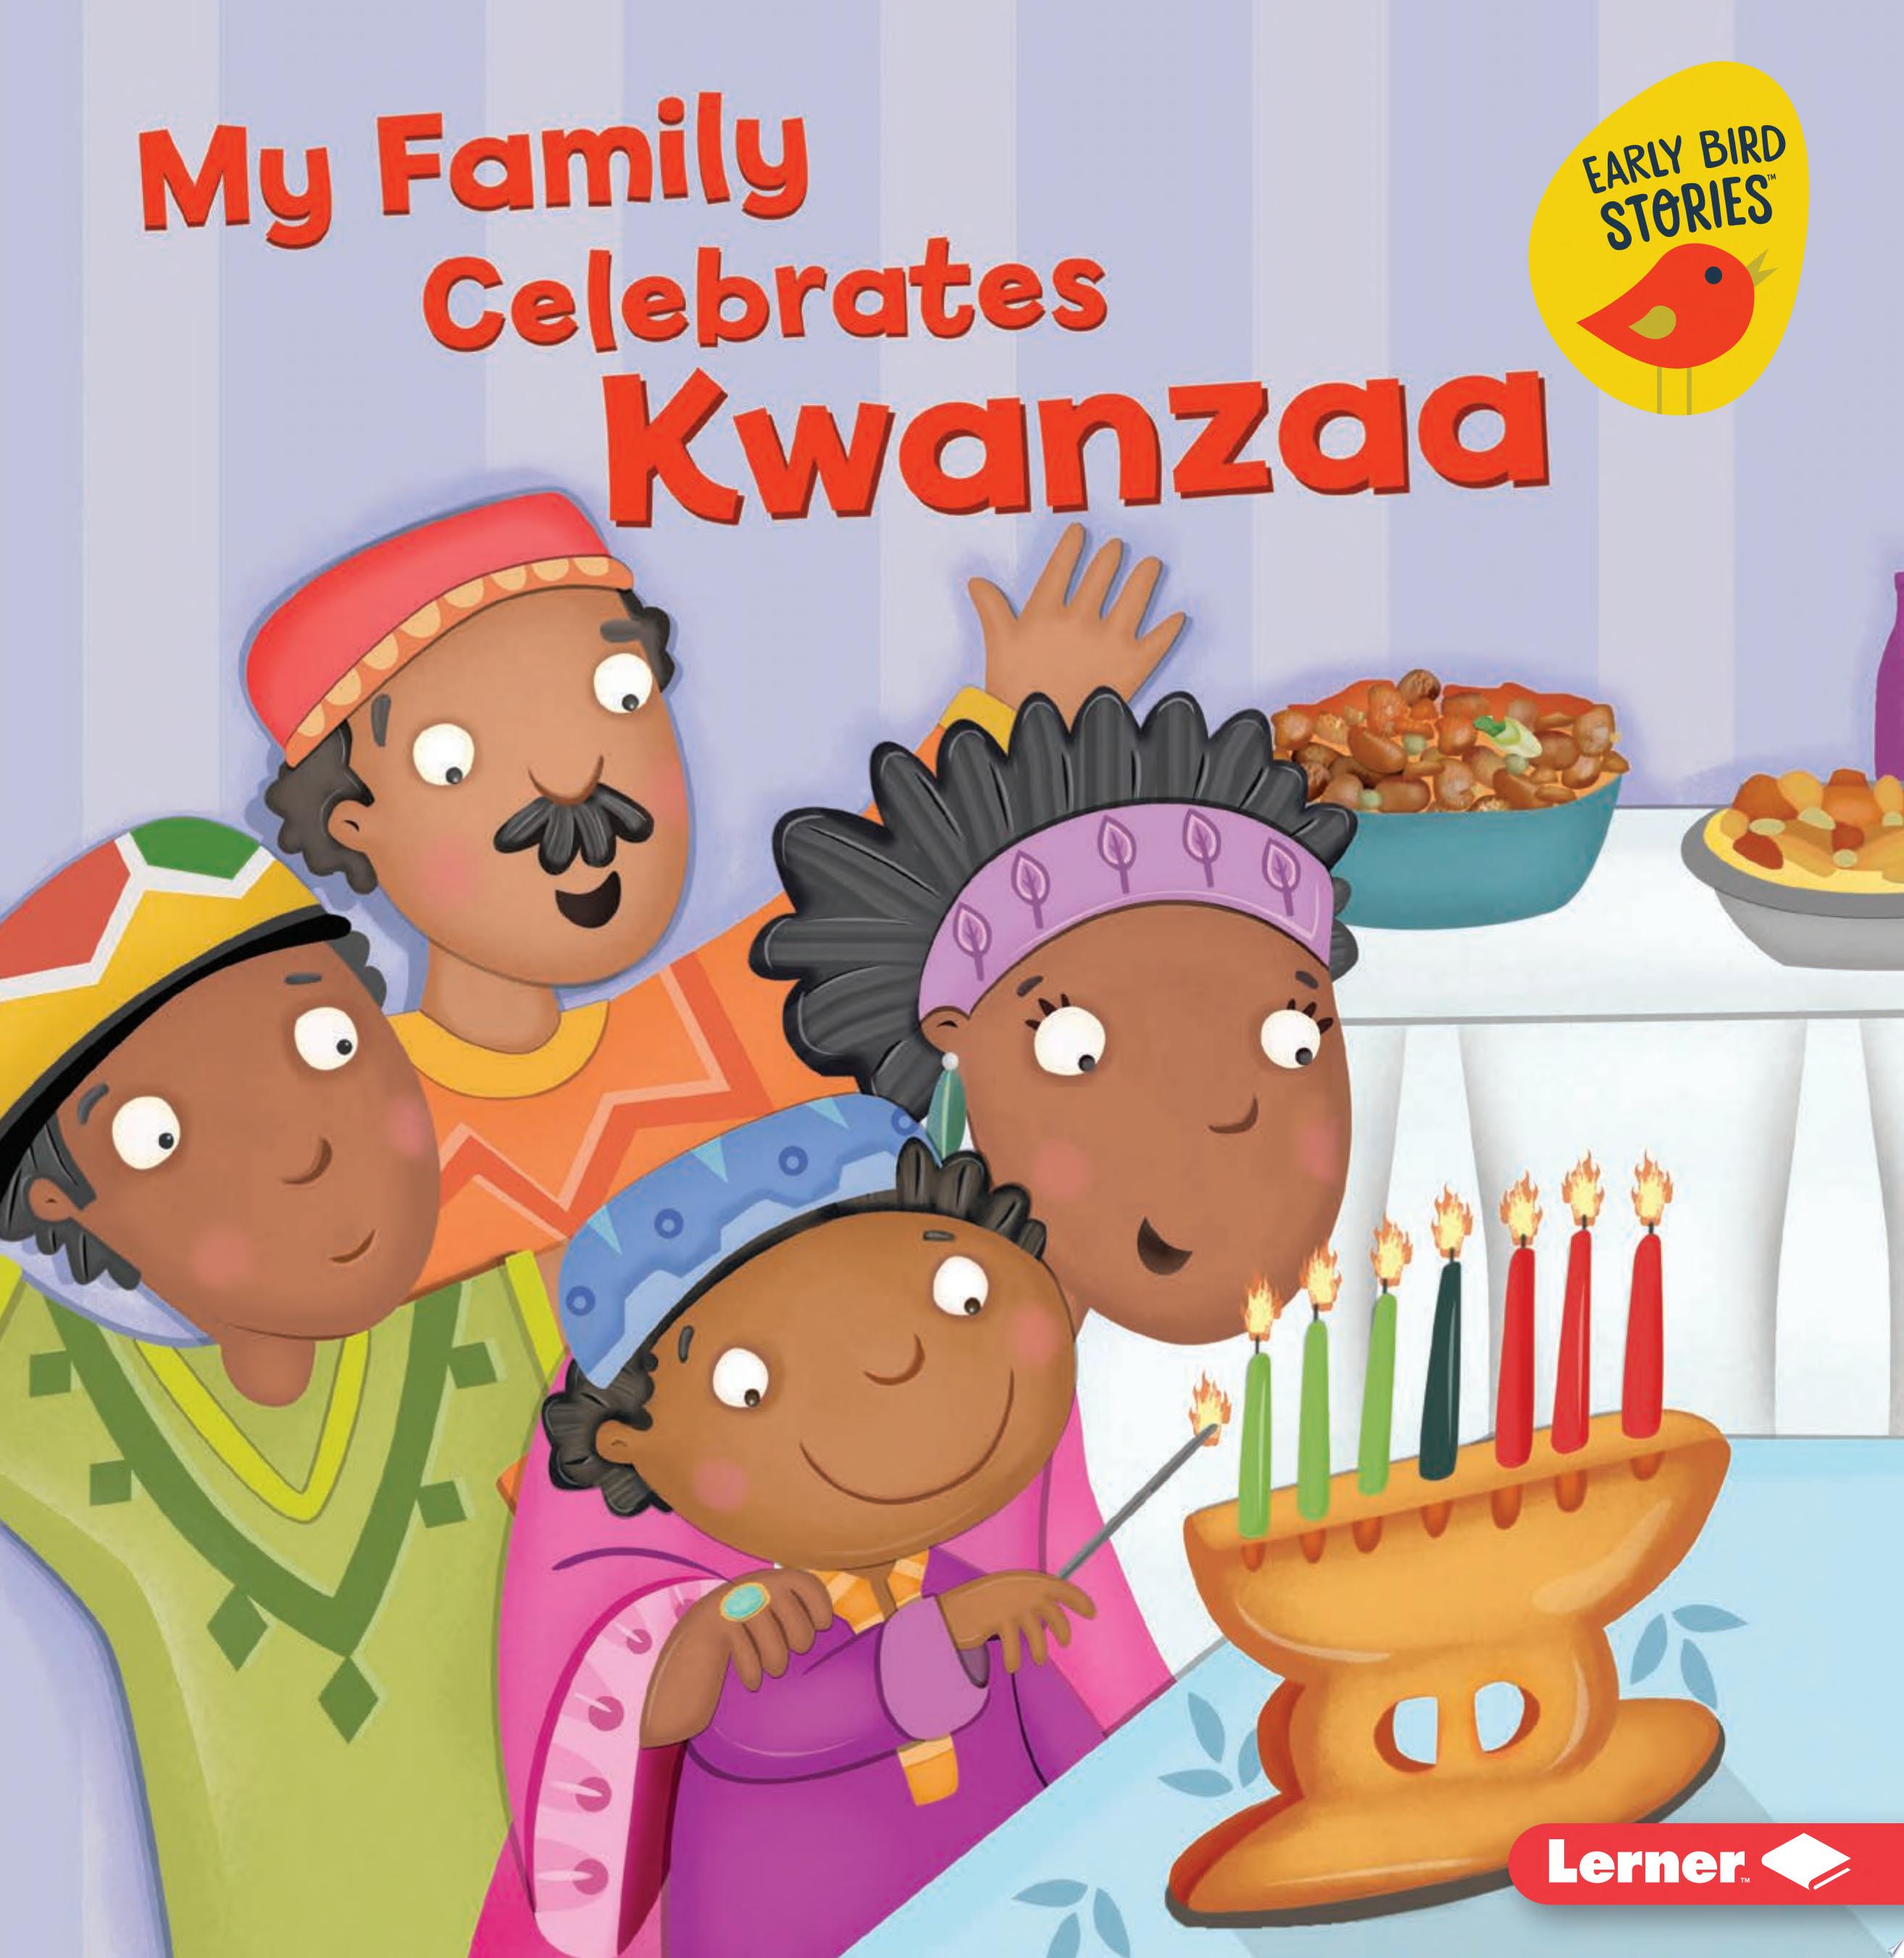 Image for "My Family Celebrates Kwanzaa"